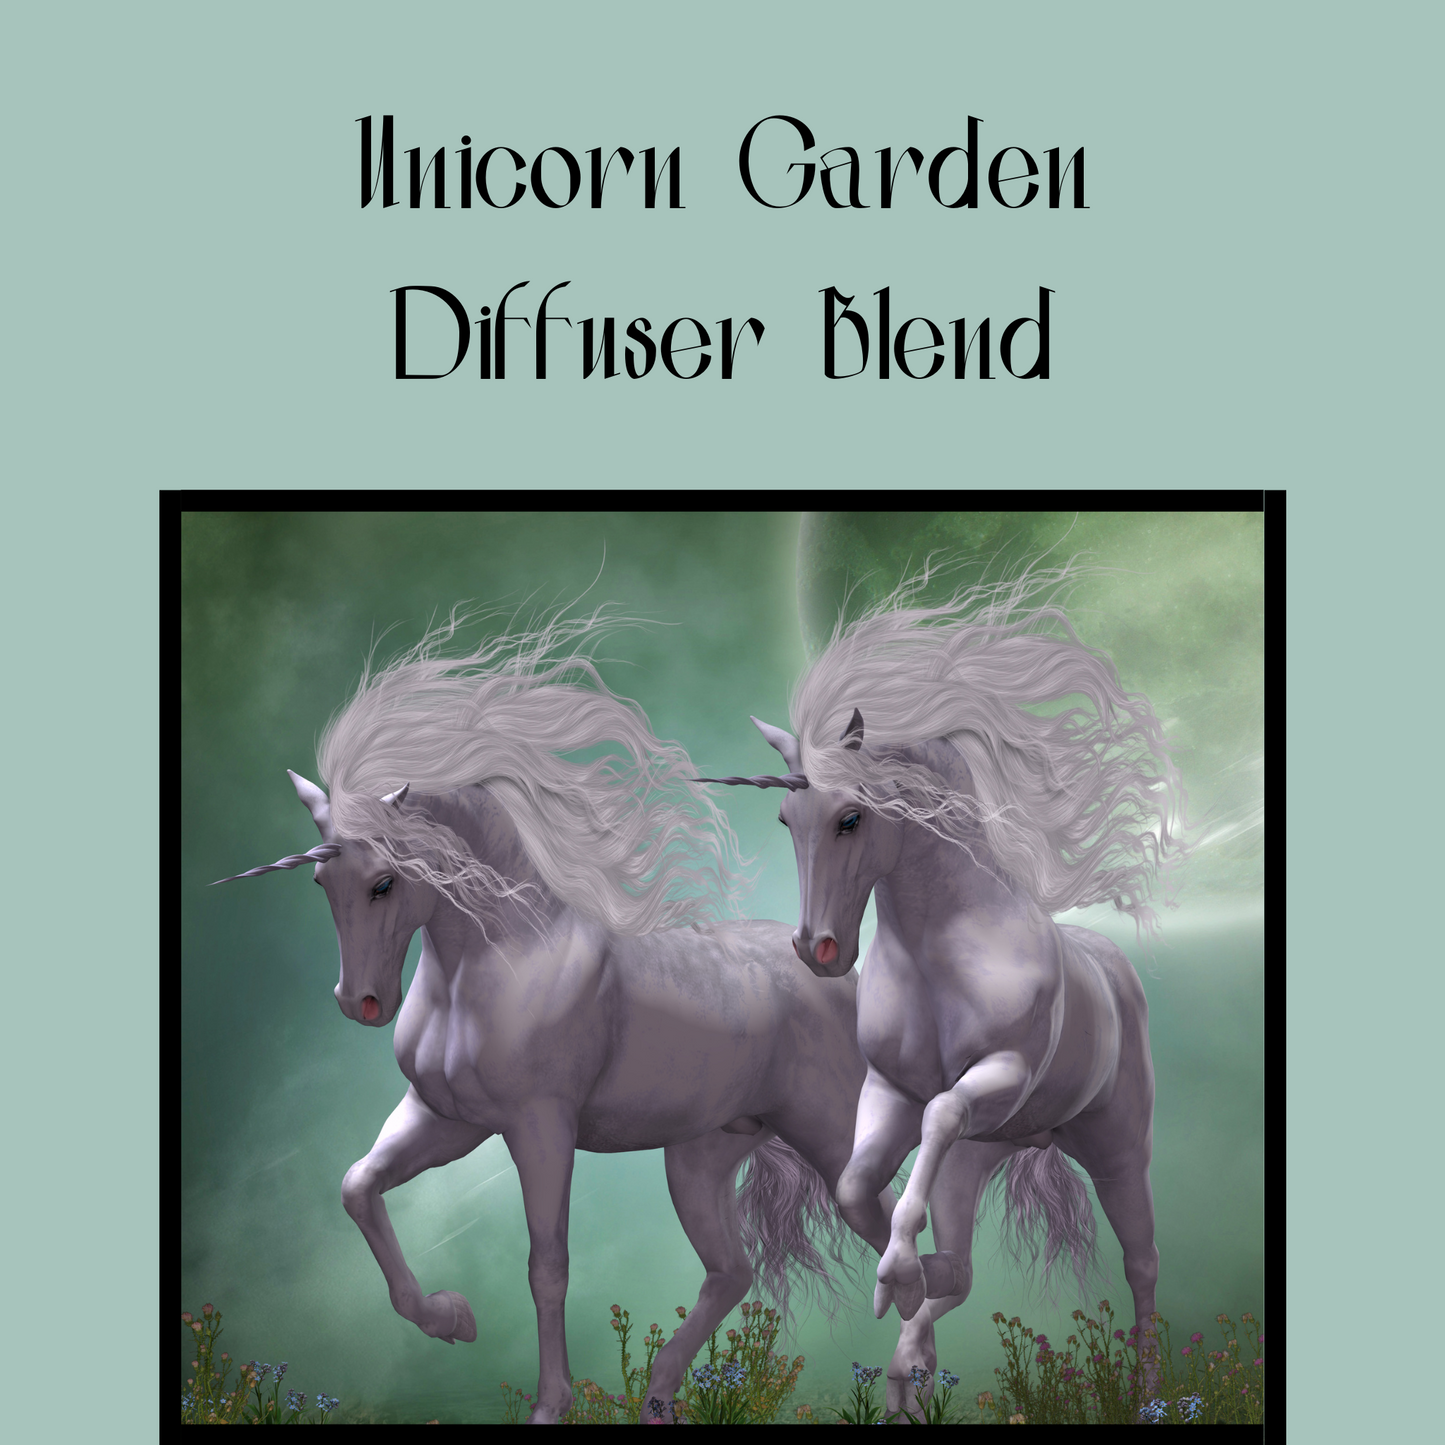 Unicorn Garden Diffuser Blend